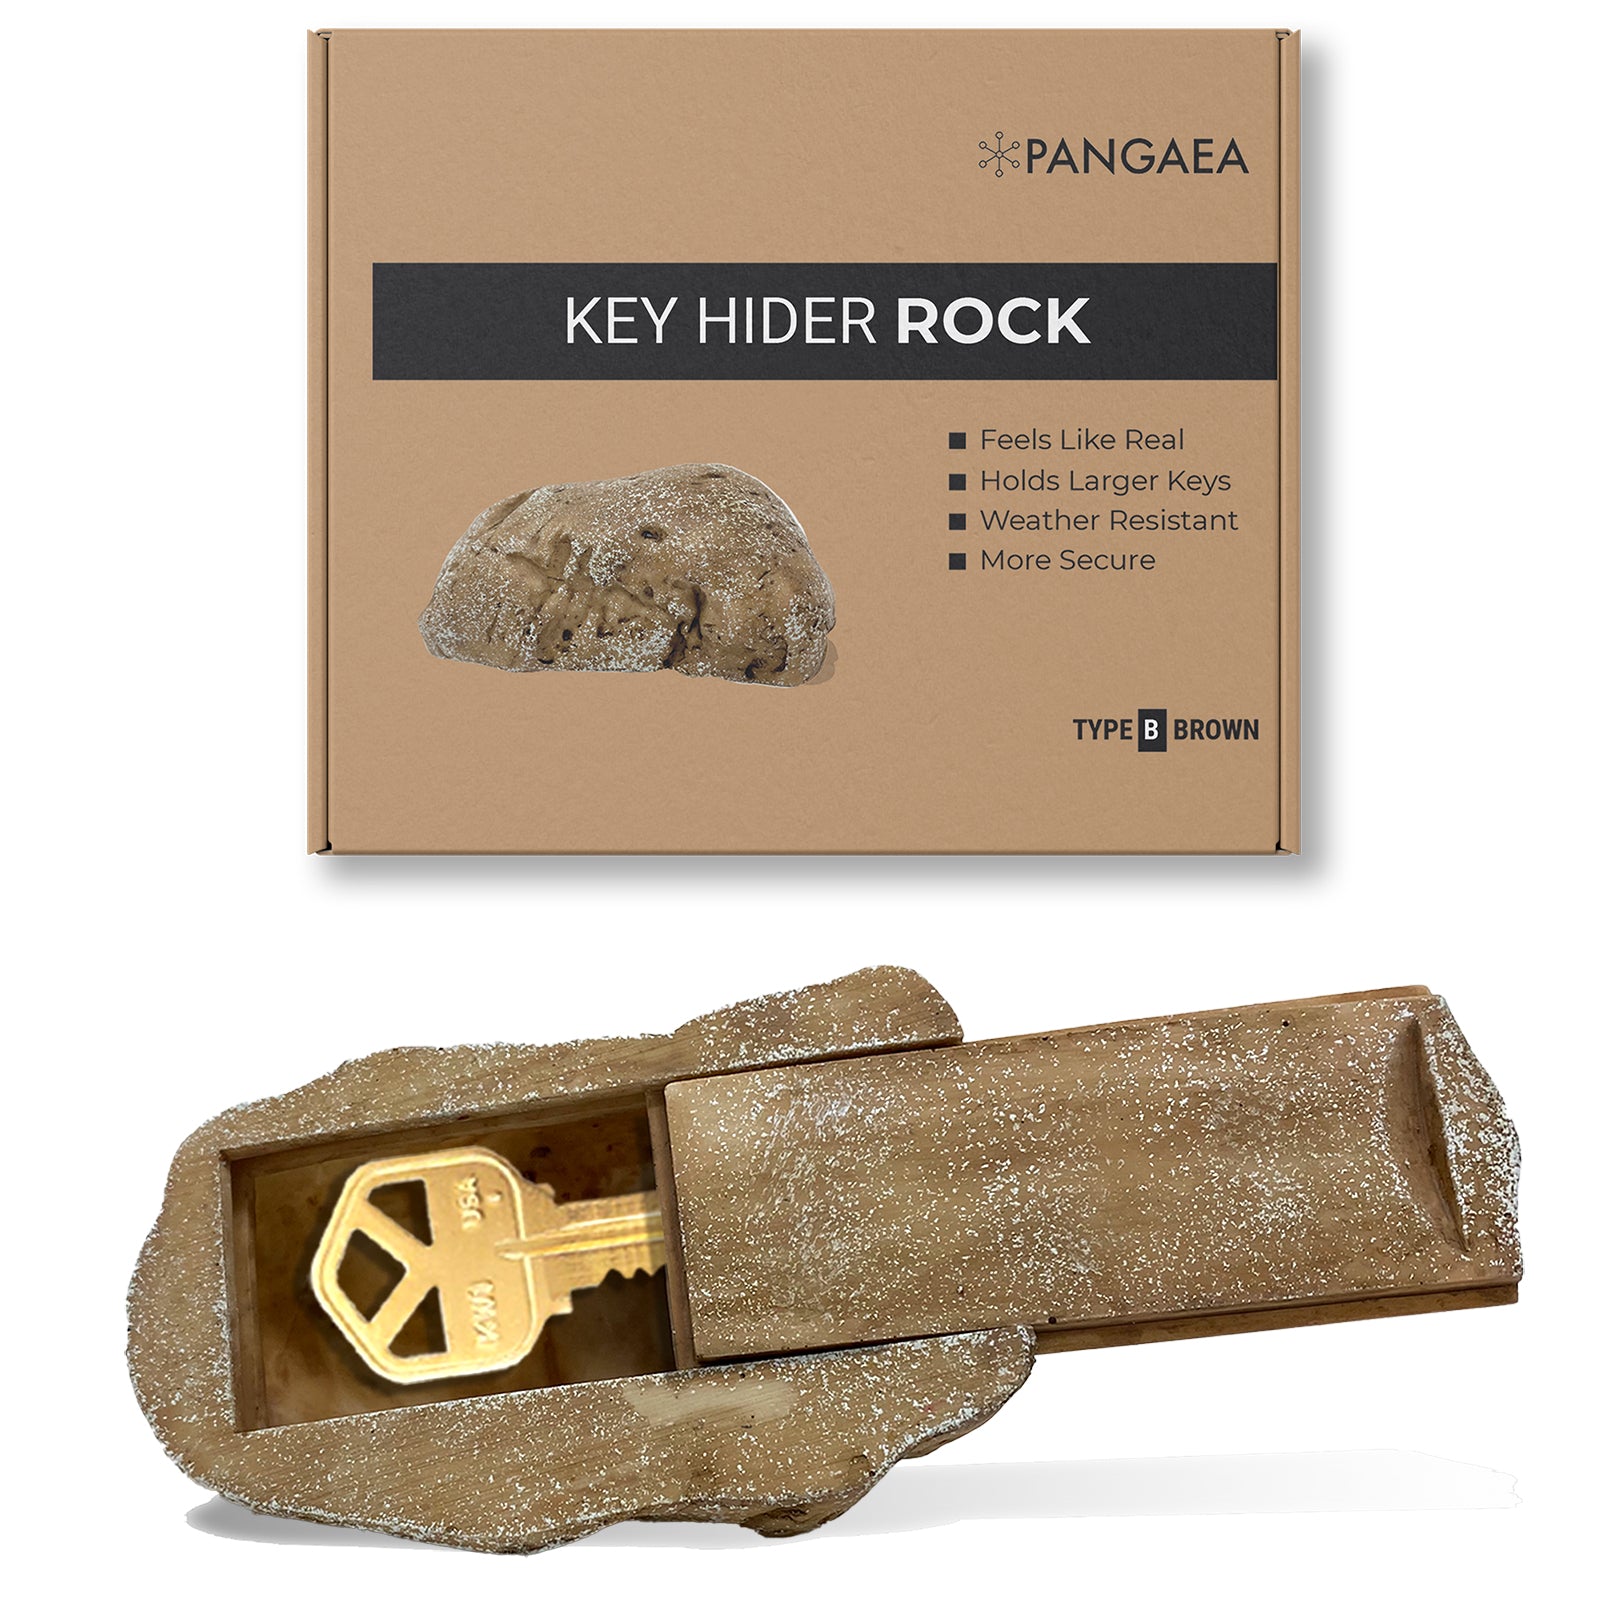 fake rock to hide keys, spare key hiding place